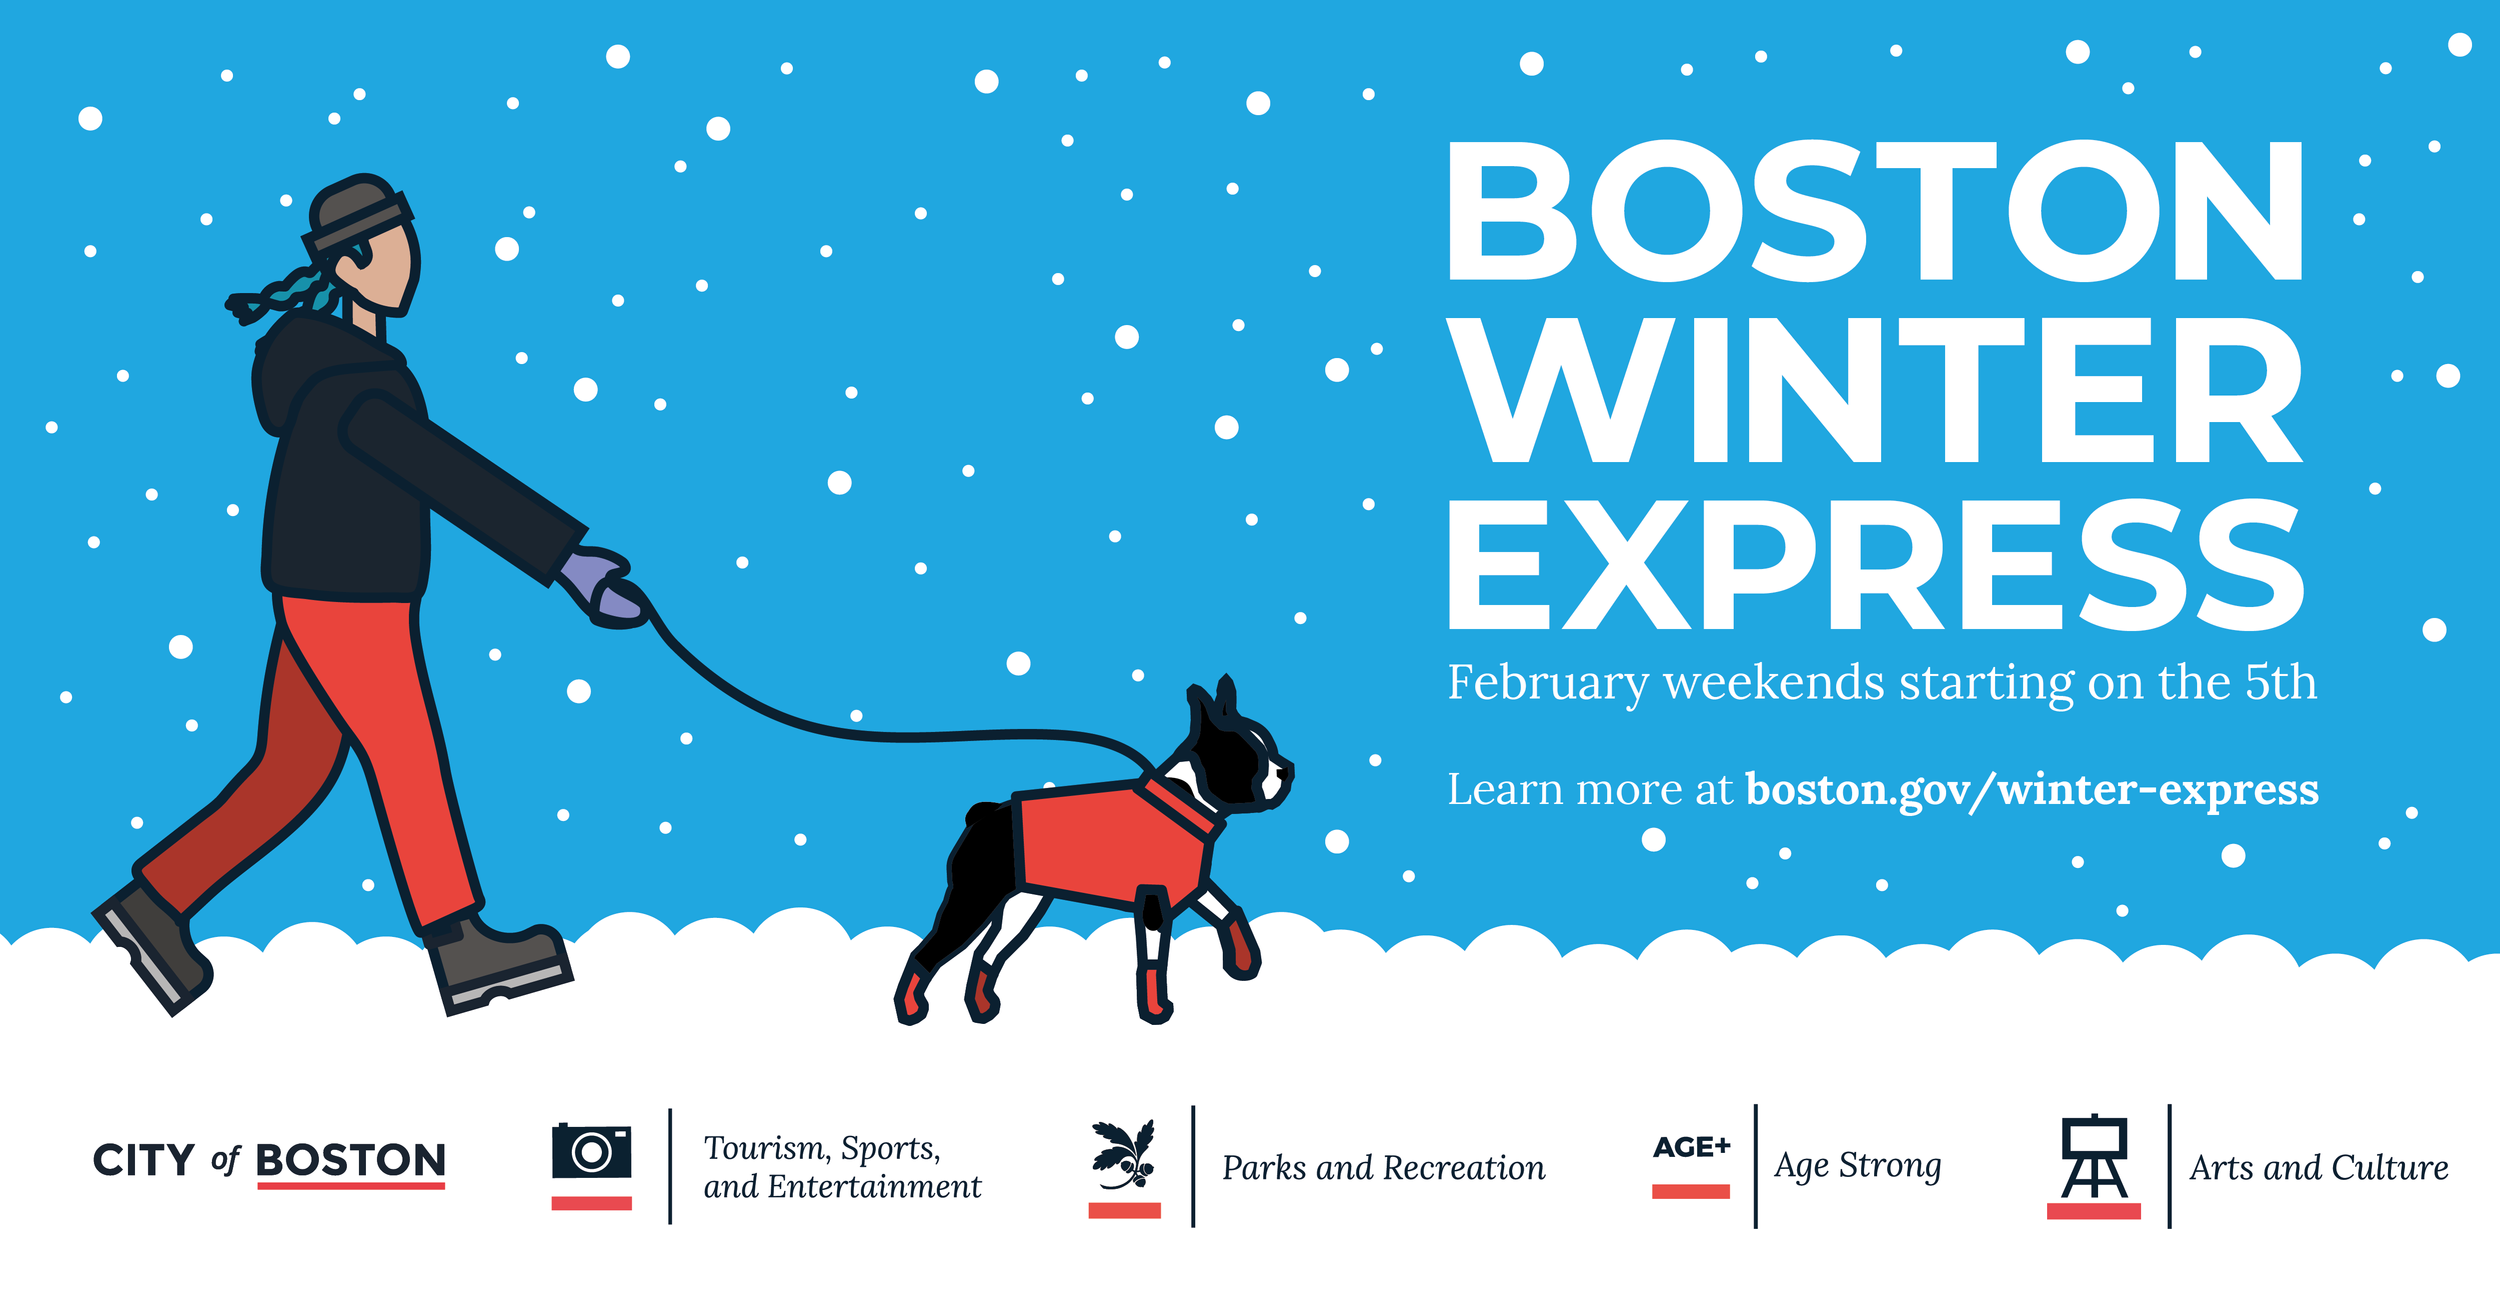 2137-boston winter express_2137-03-winter-express-bos-fb-3 copy.png